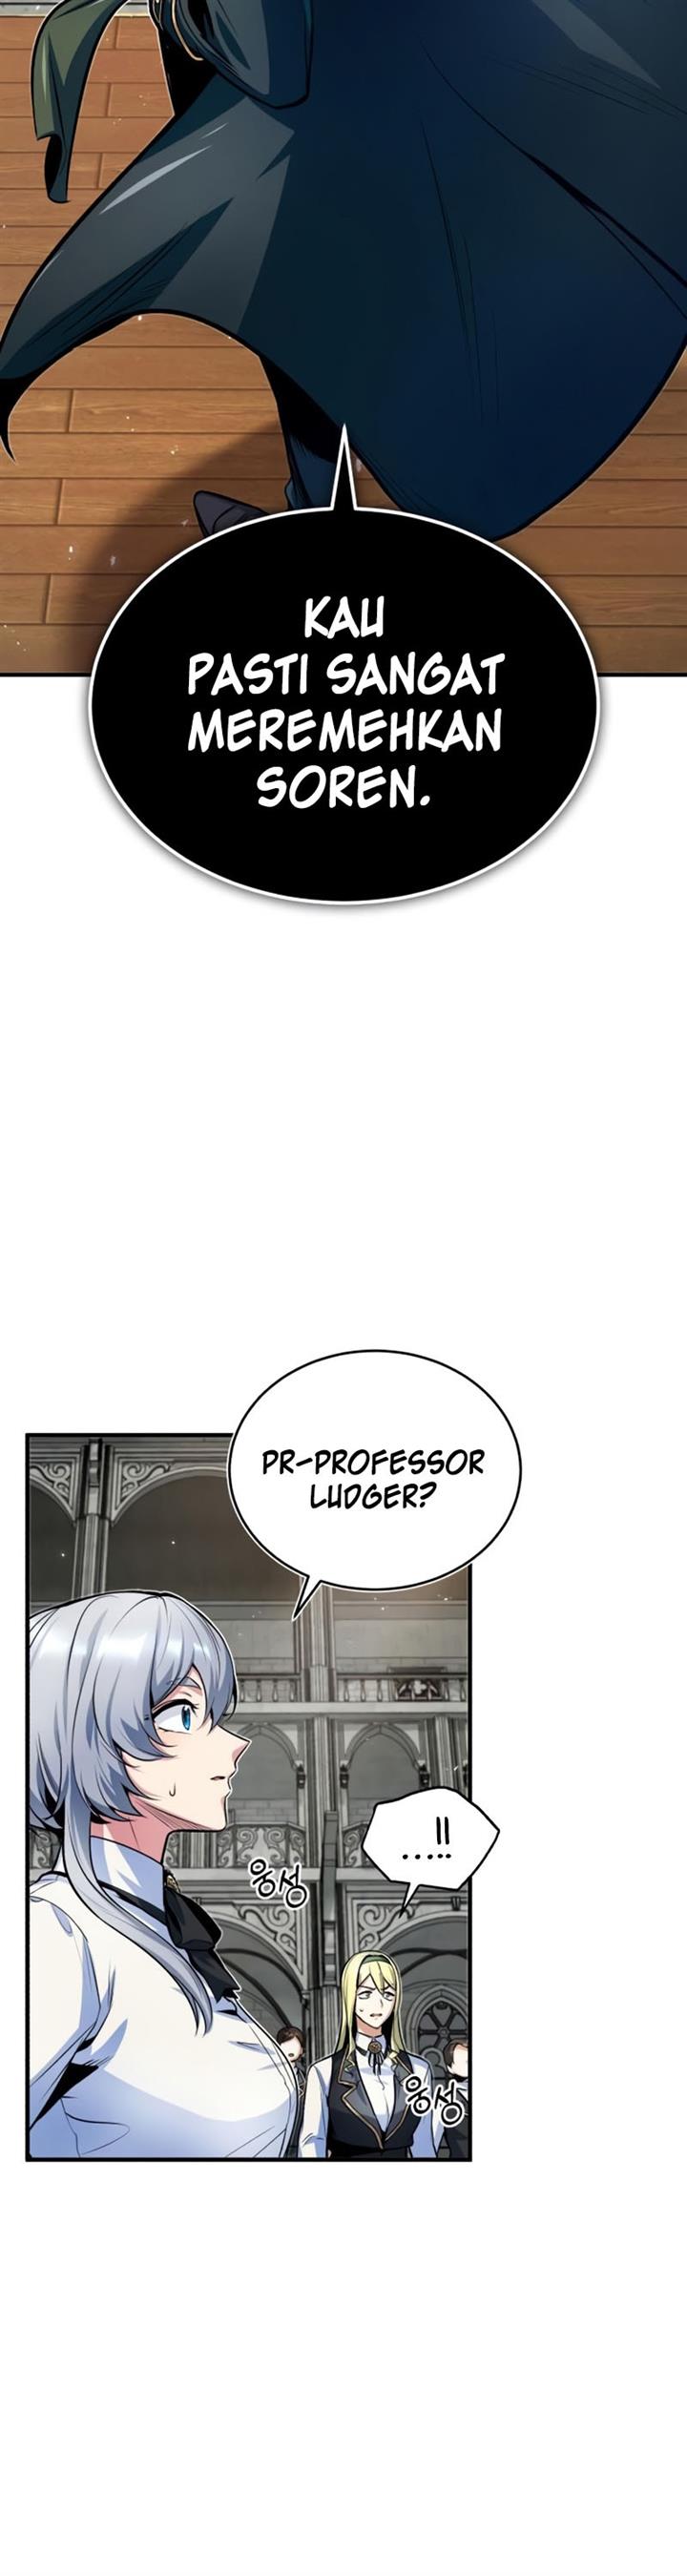 Academy’s Undercover Professor Chapter 9